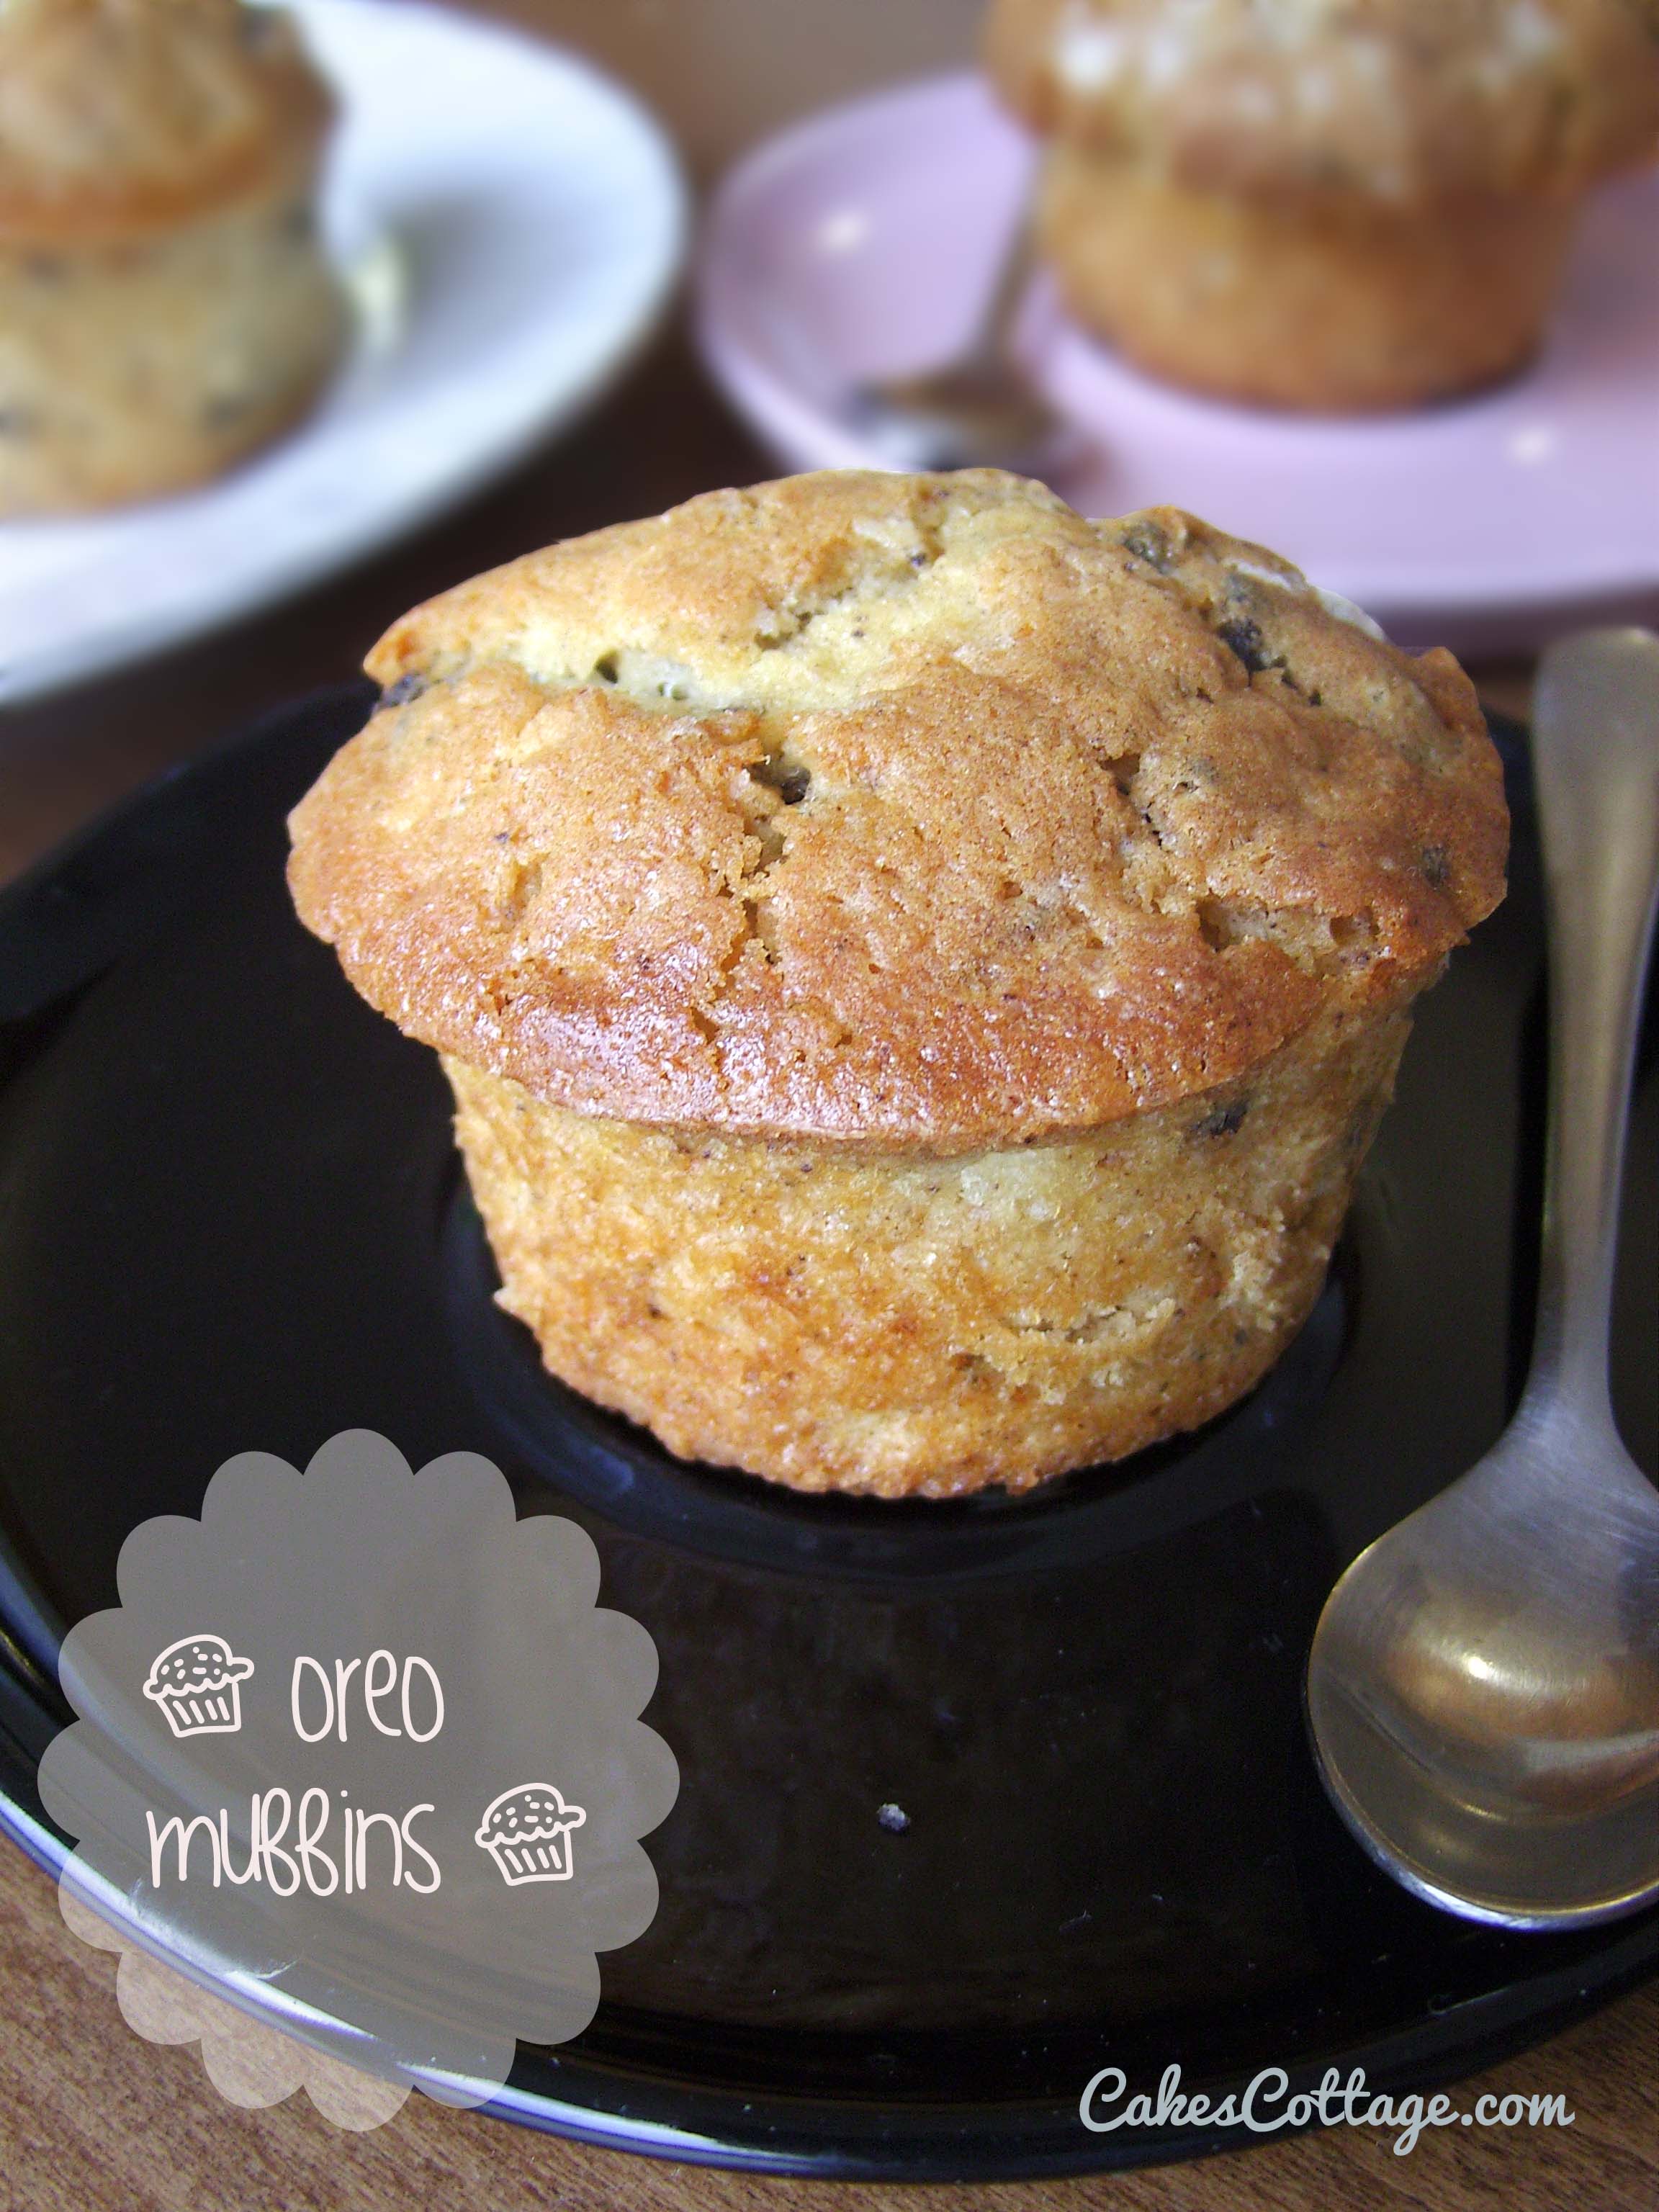 Oreo Muffins - Cakescottage